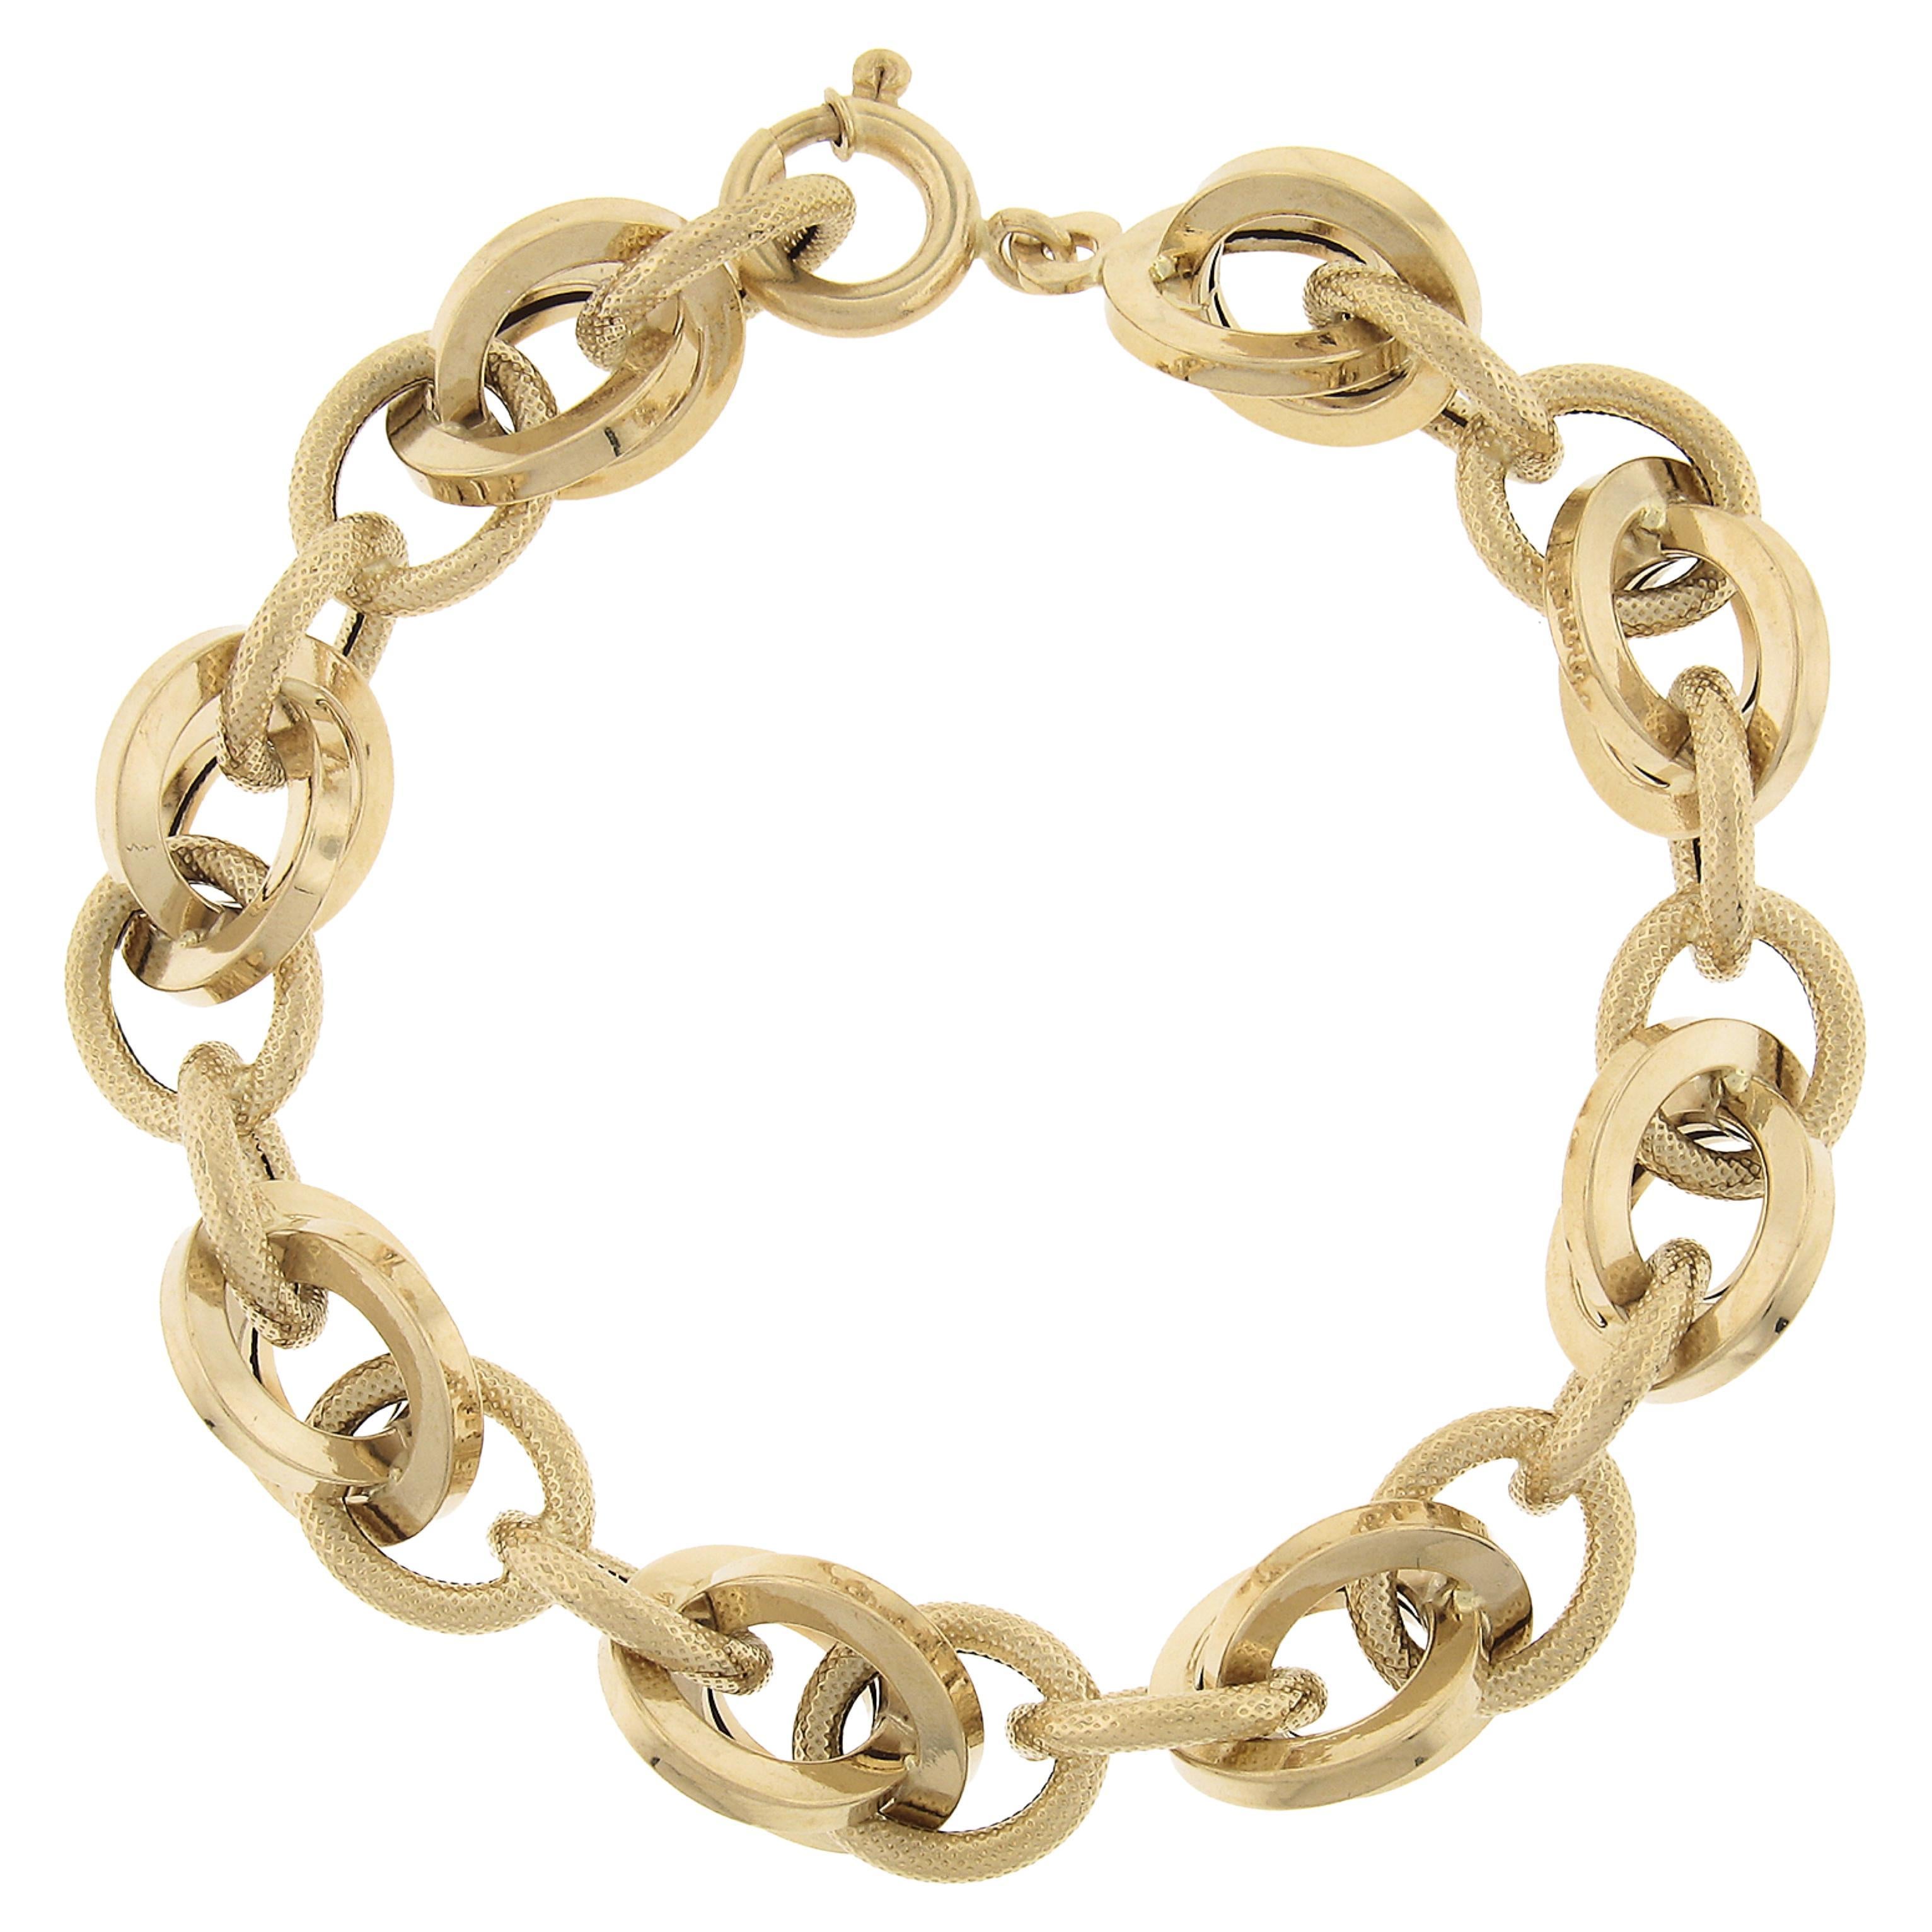 UNOEARRE 18k Gold Textured & Polished Interlocking Round Link Chain Bracelet For Sale